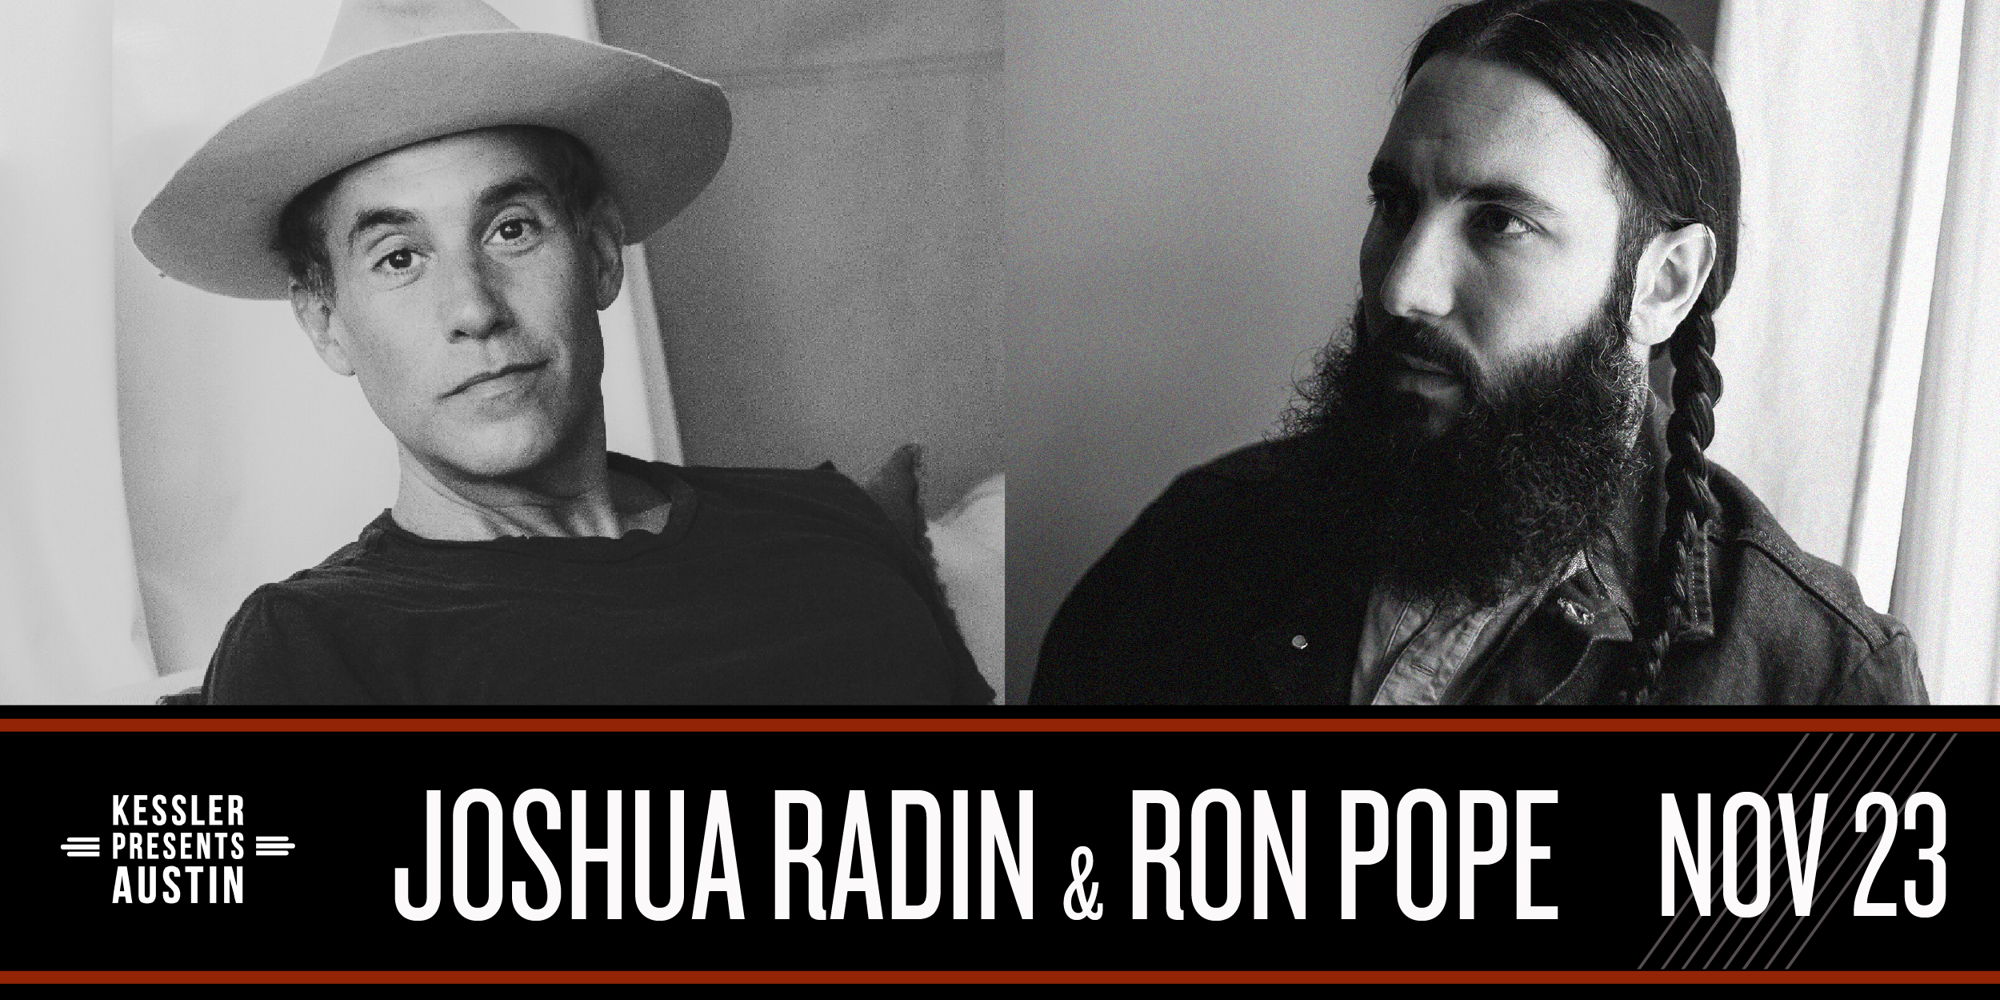 Joshua Radin and Ron Pope promotional image